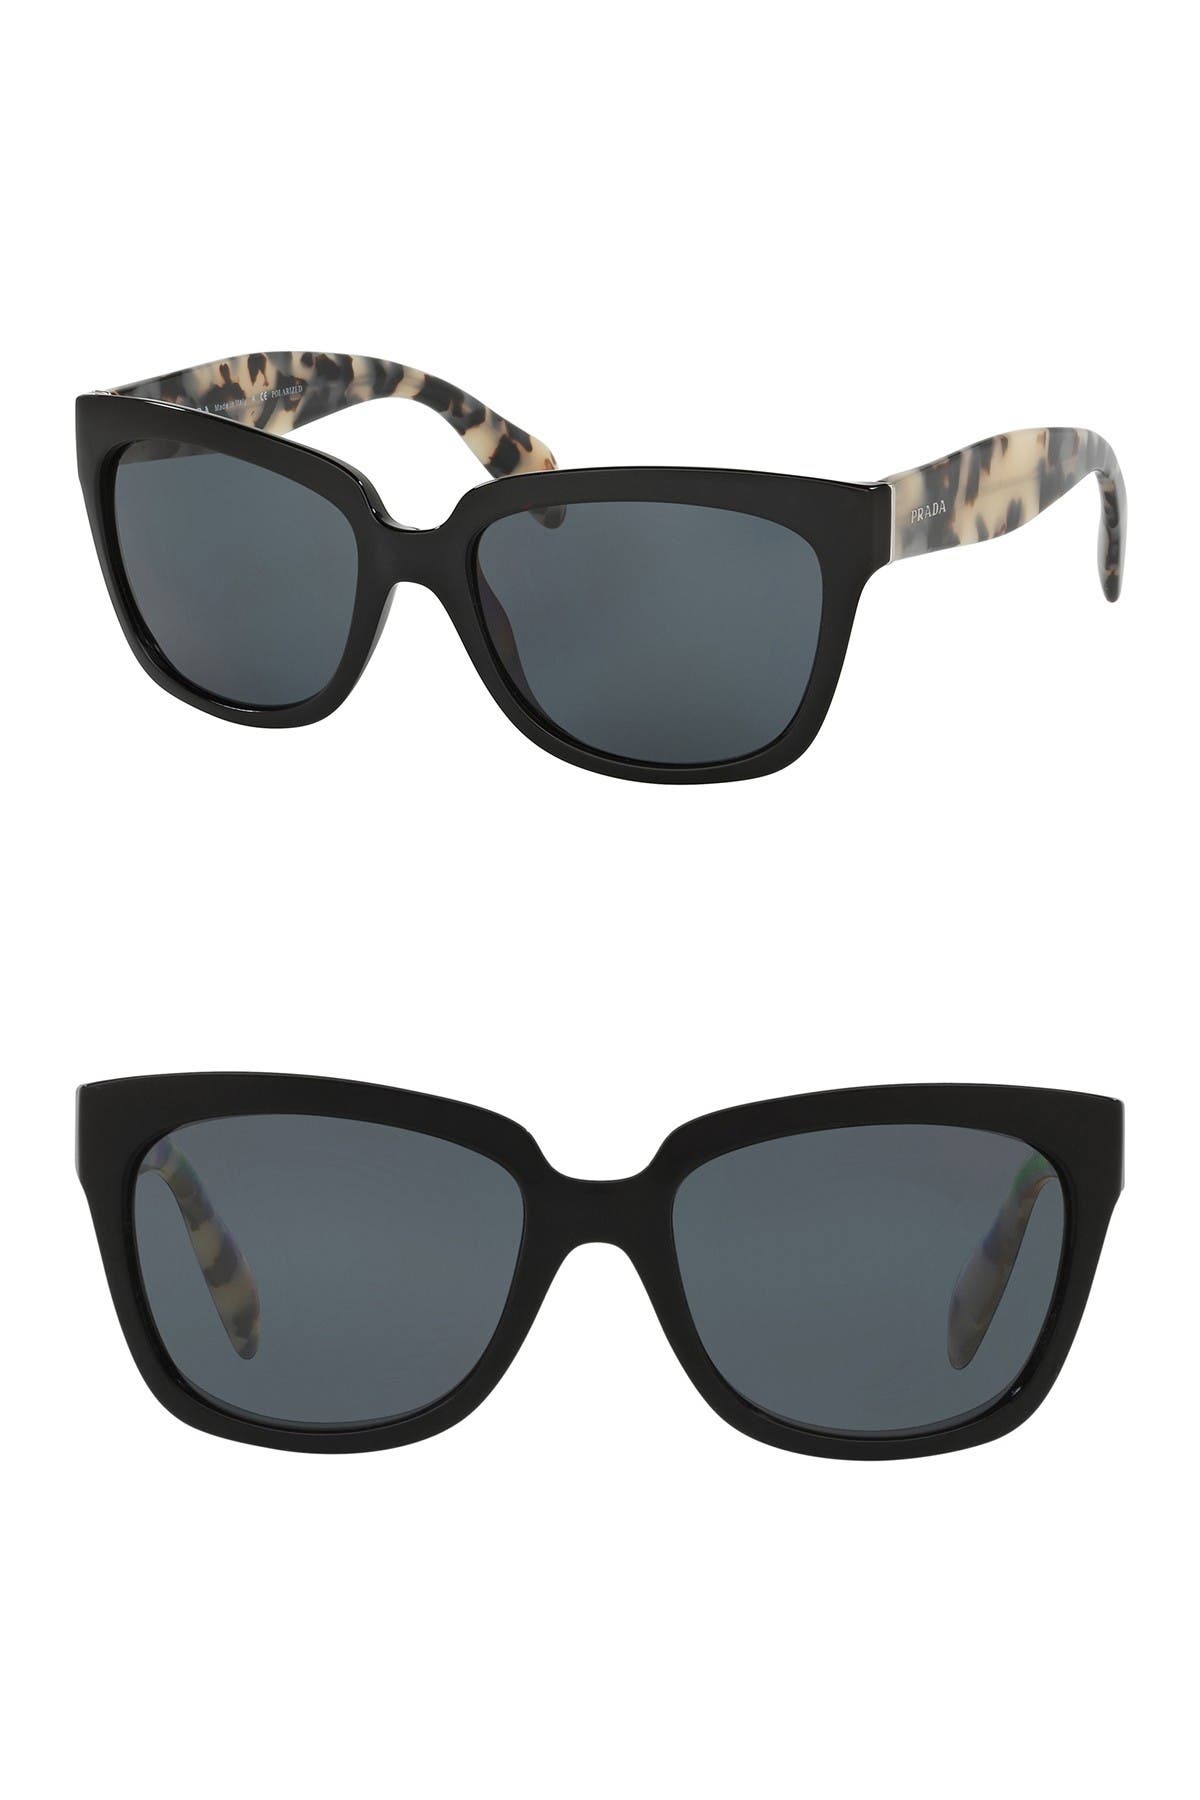 Prada | Heritage 56mm Square Sunglasses 